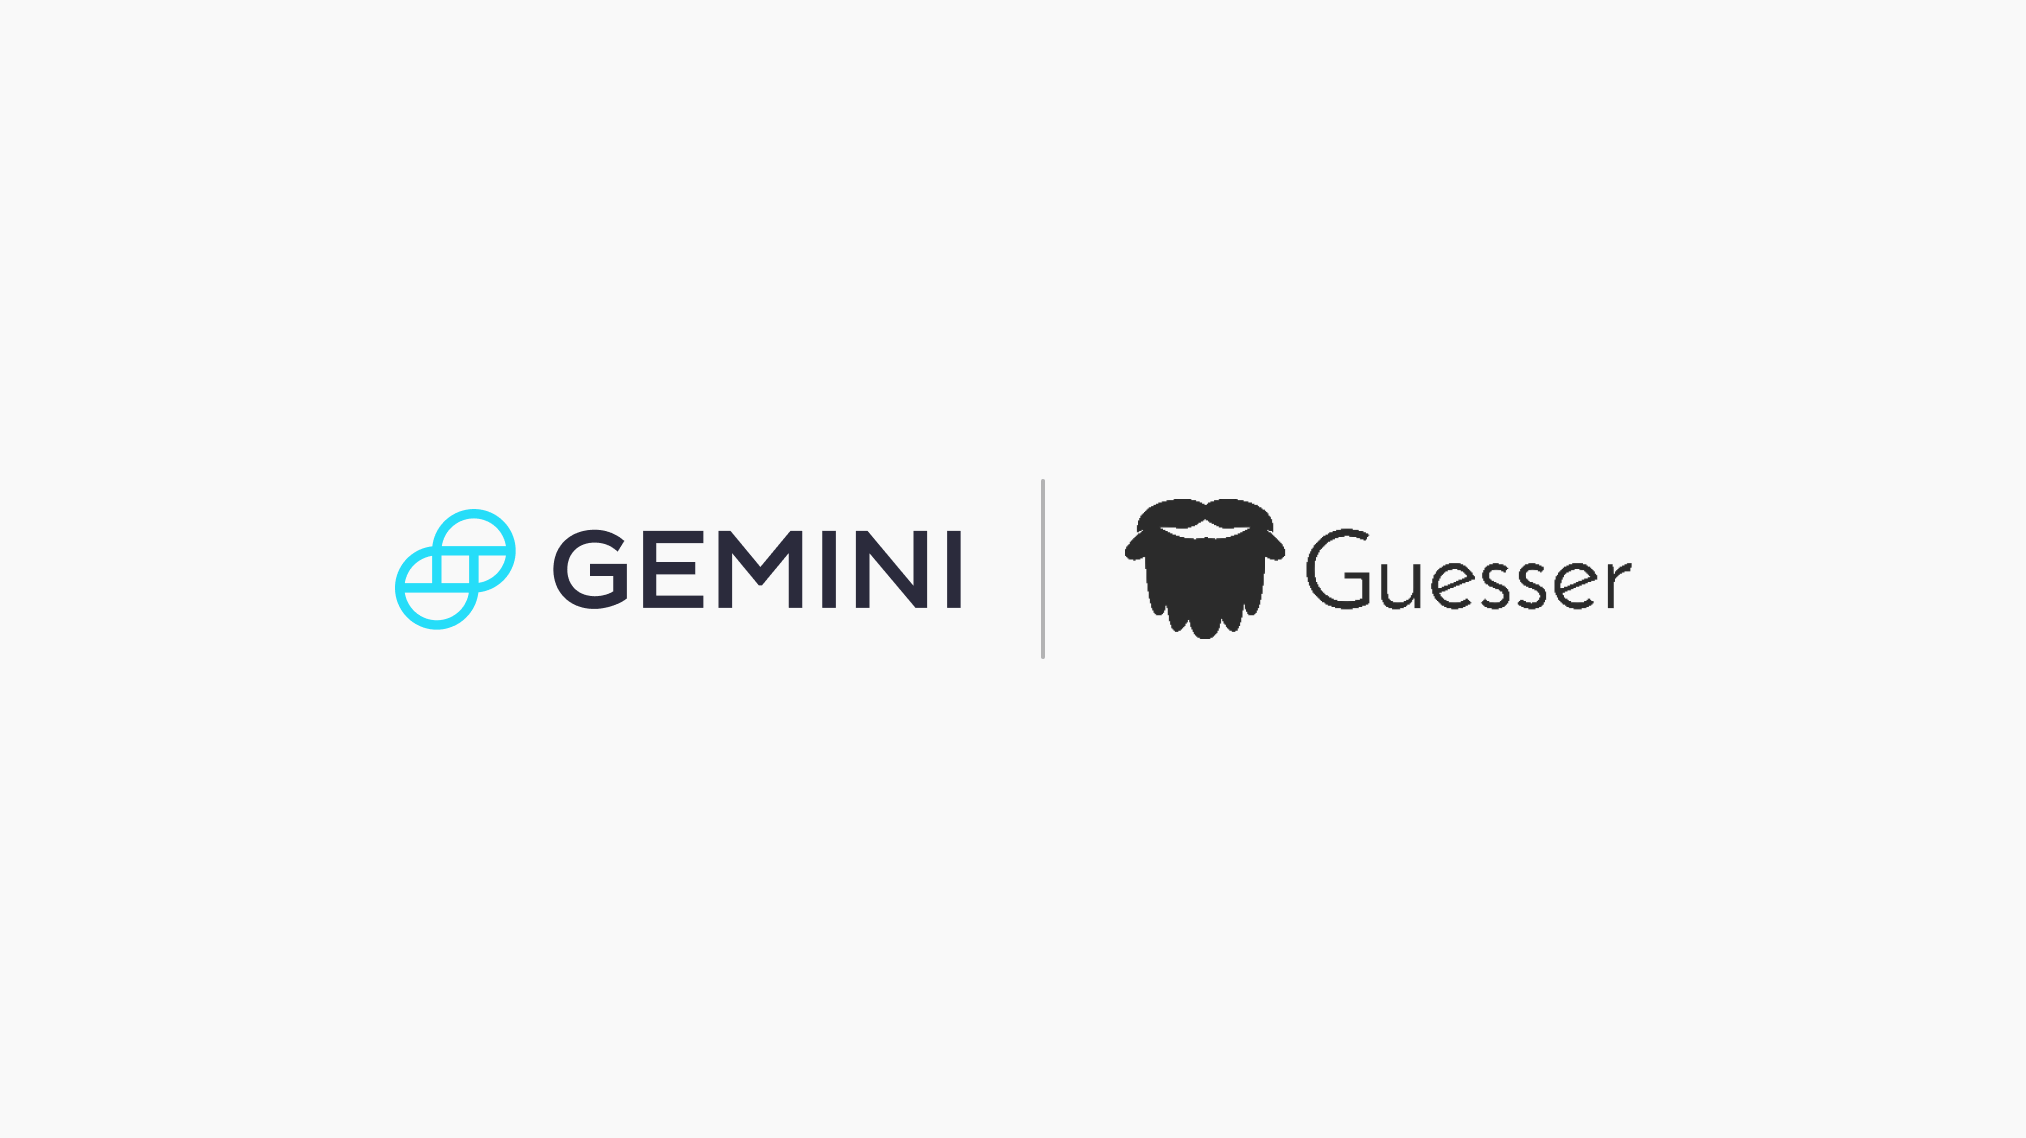 Guesser-Gemini Partnership-Blog Header